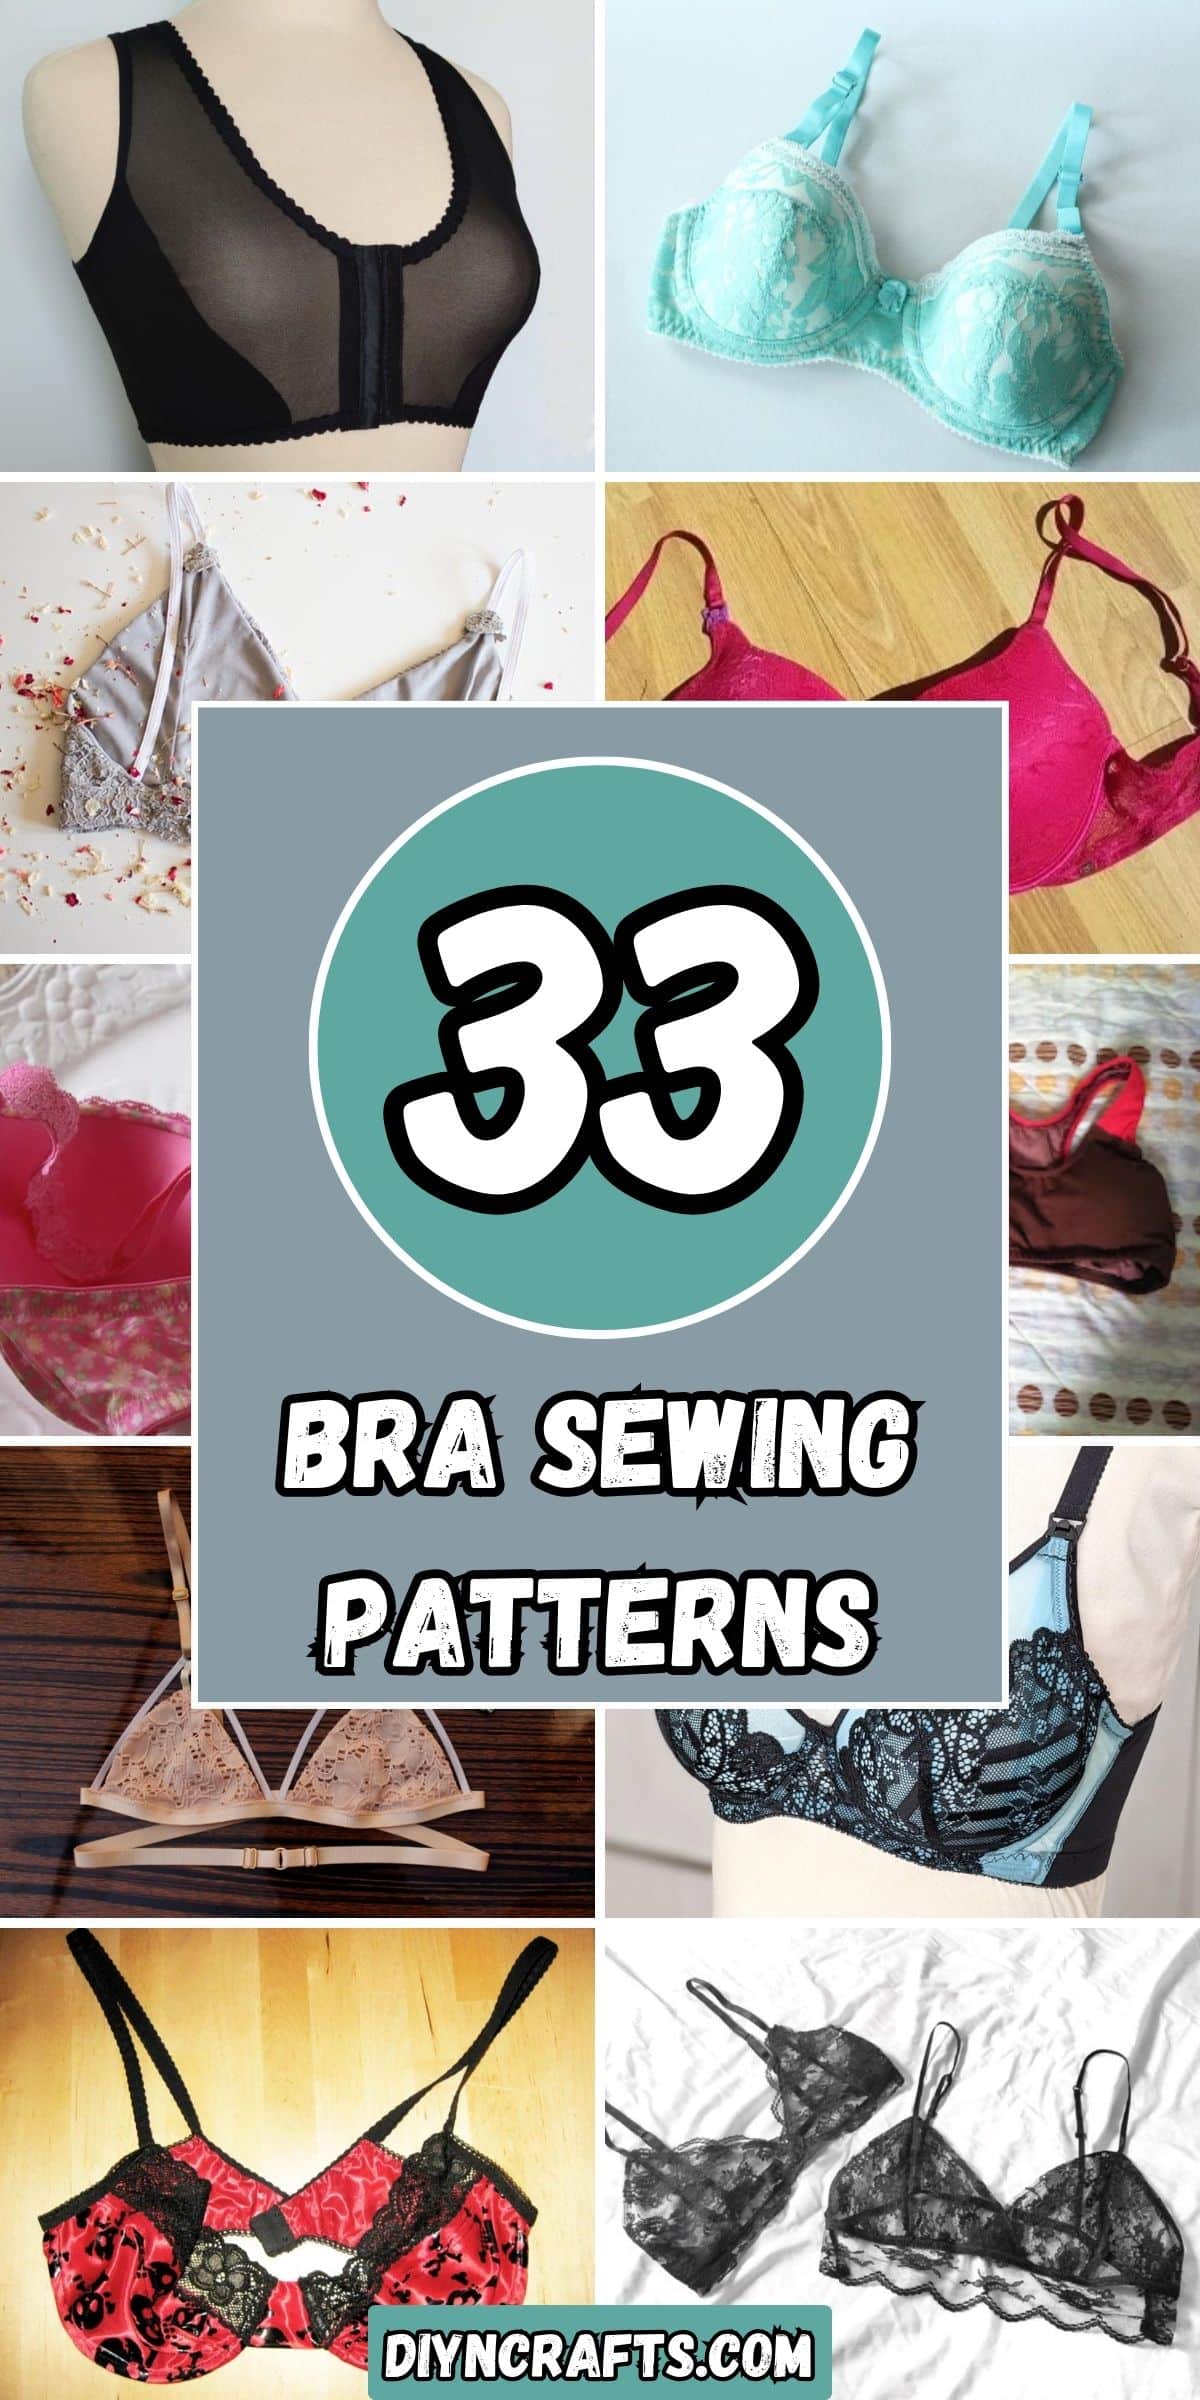 33 Bra Sewing Patterns collage.